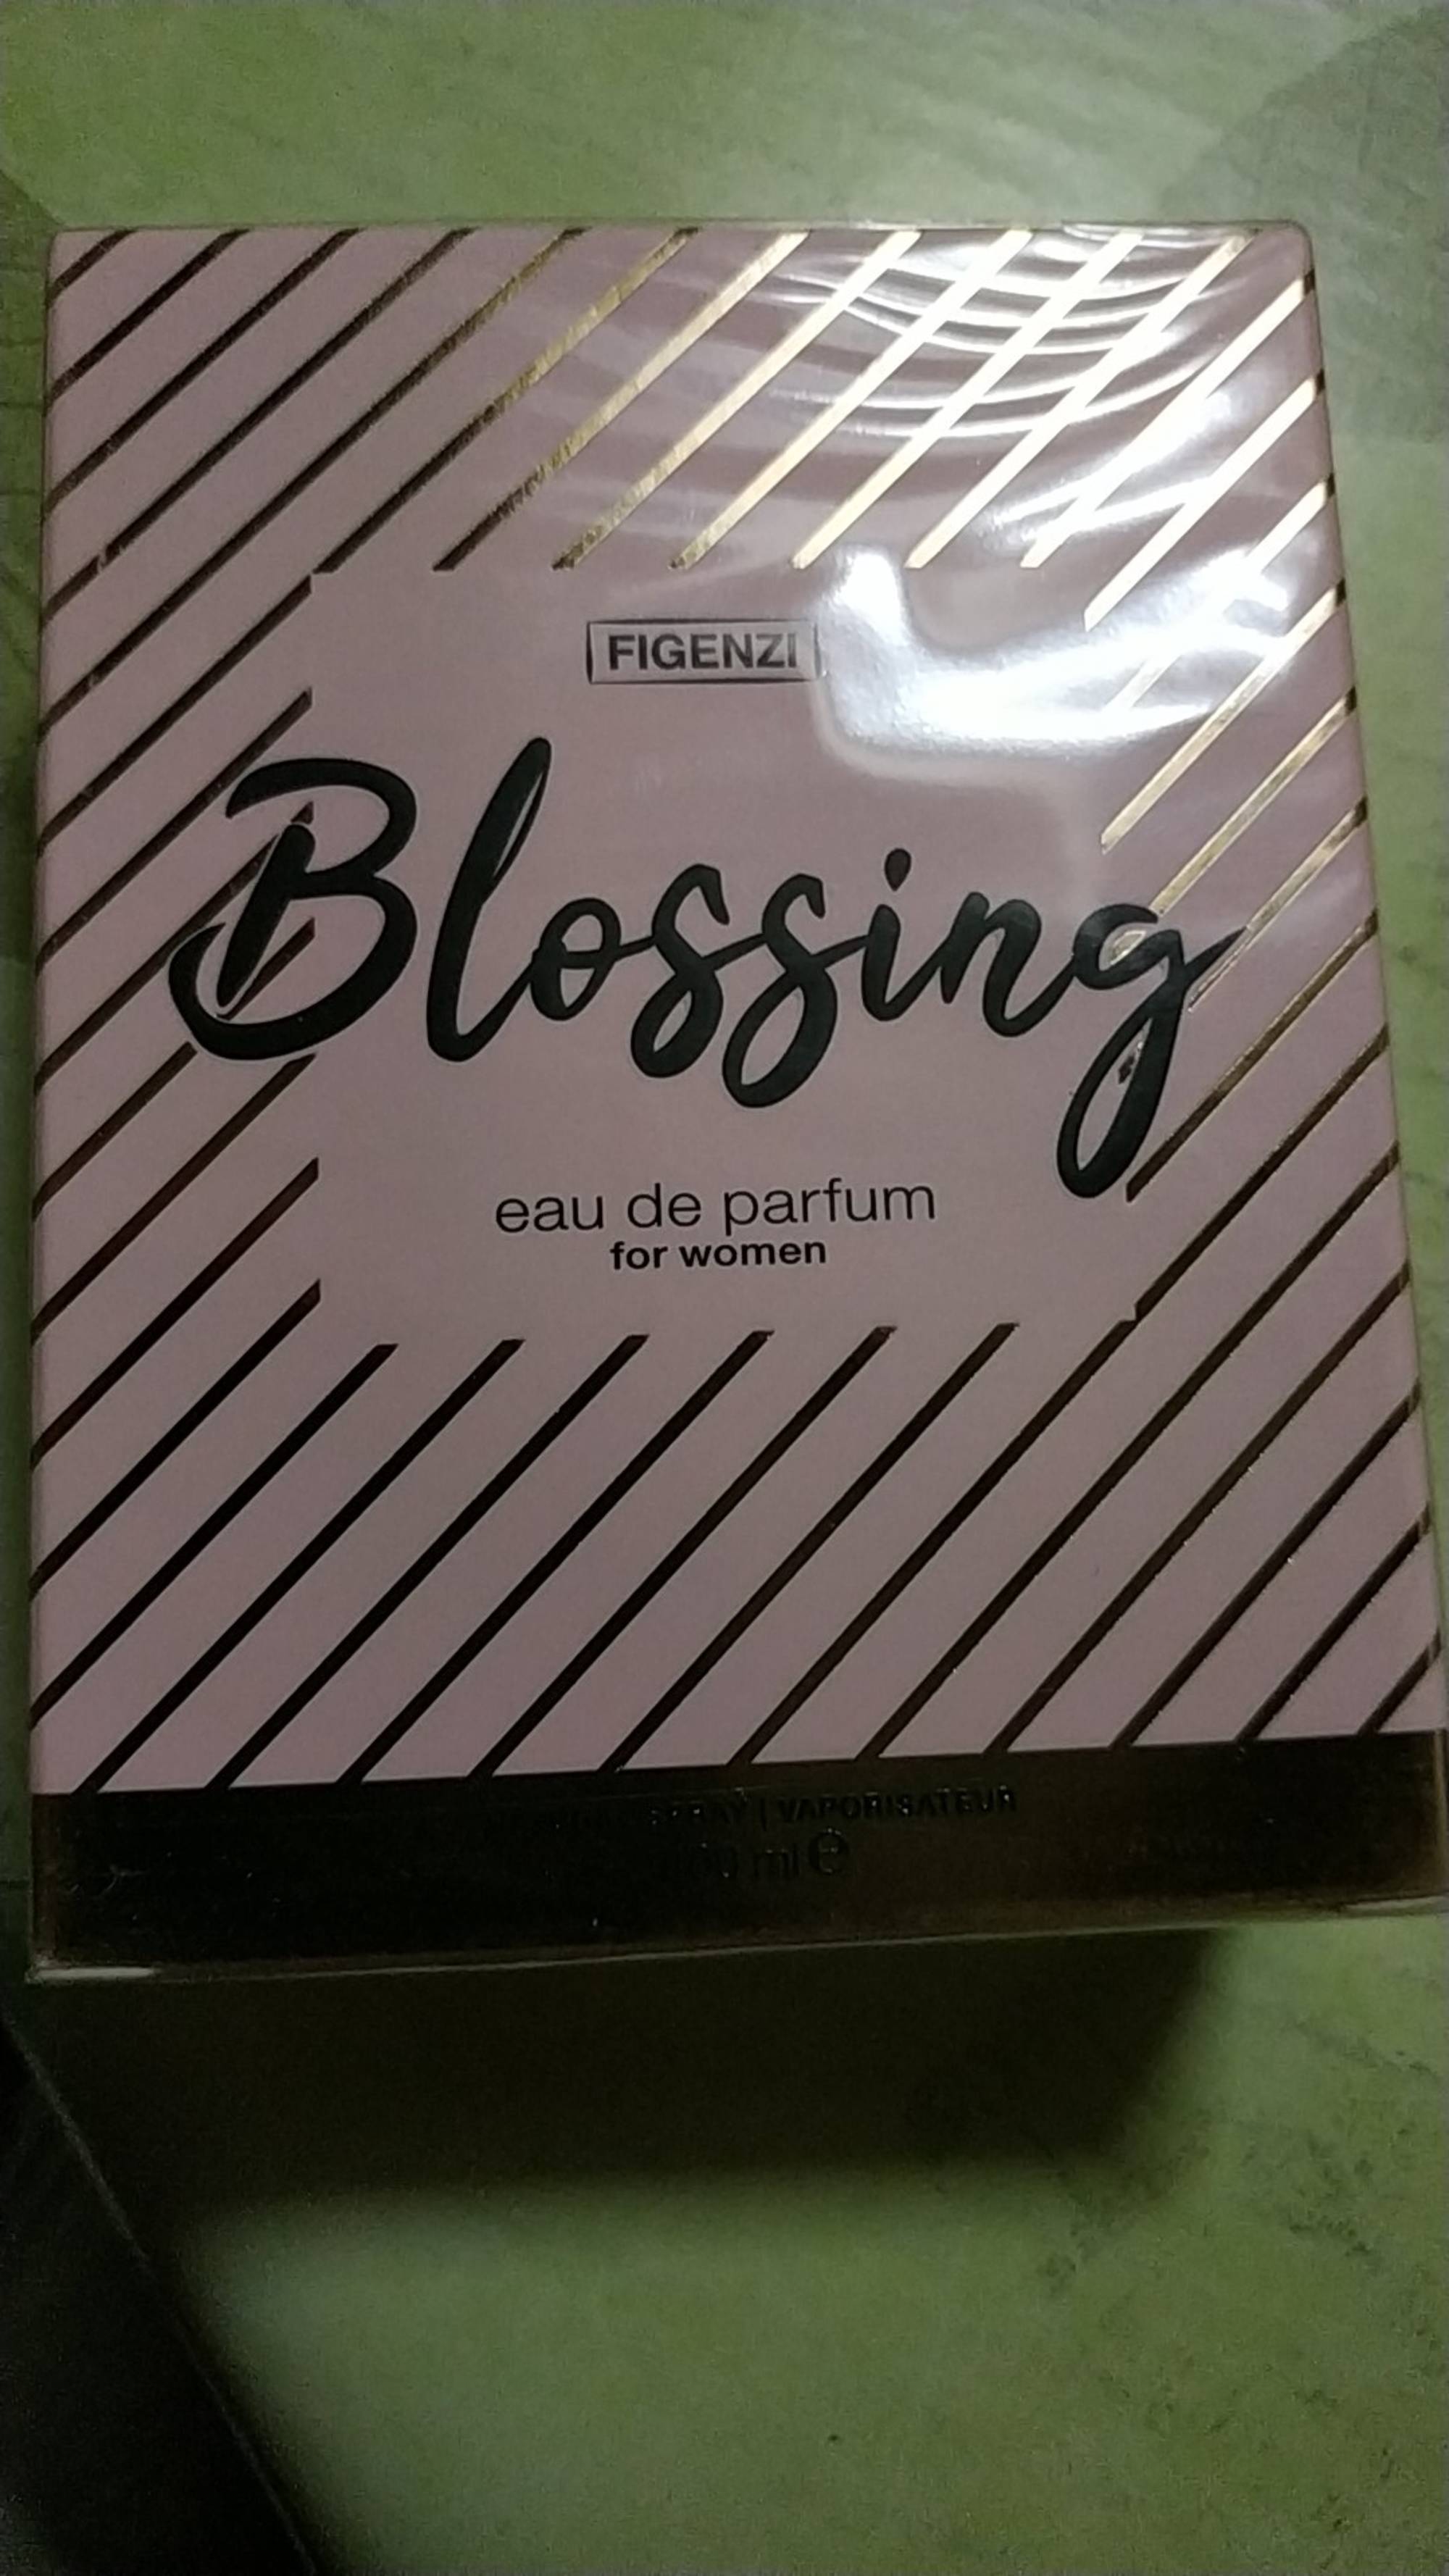 FIGENZI - Blossing - Eau de parfum for women